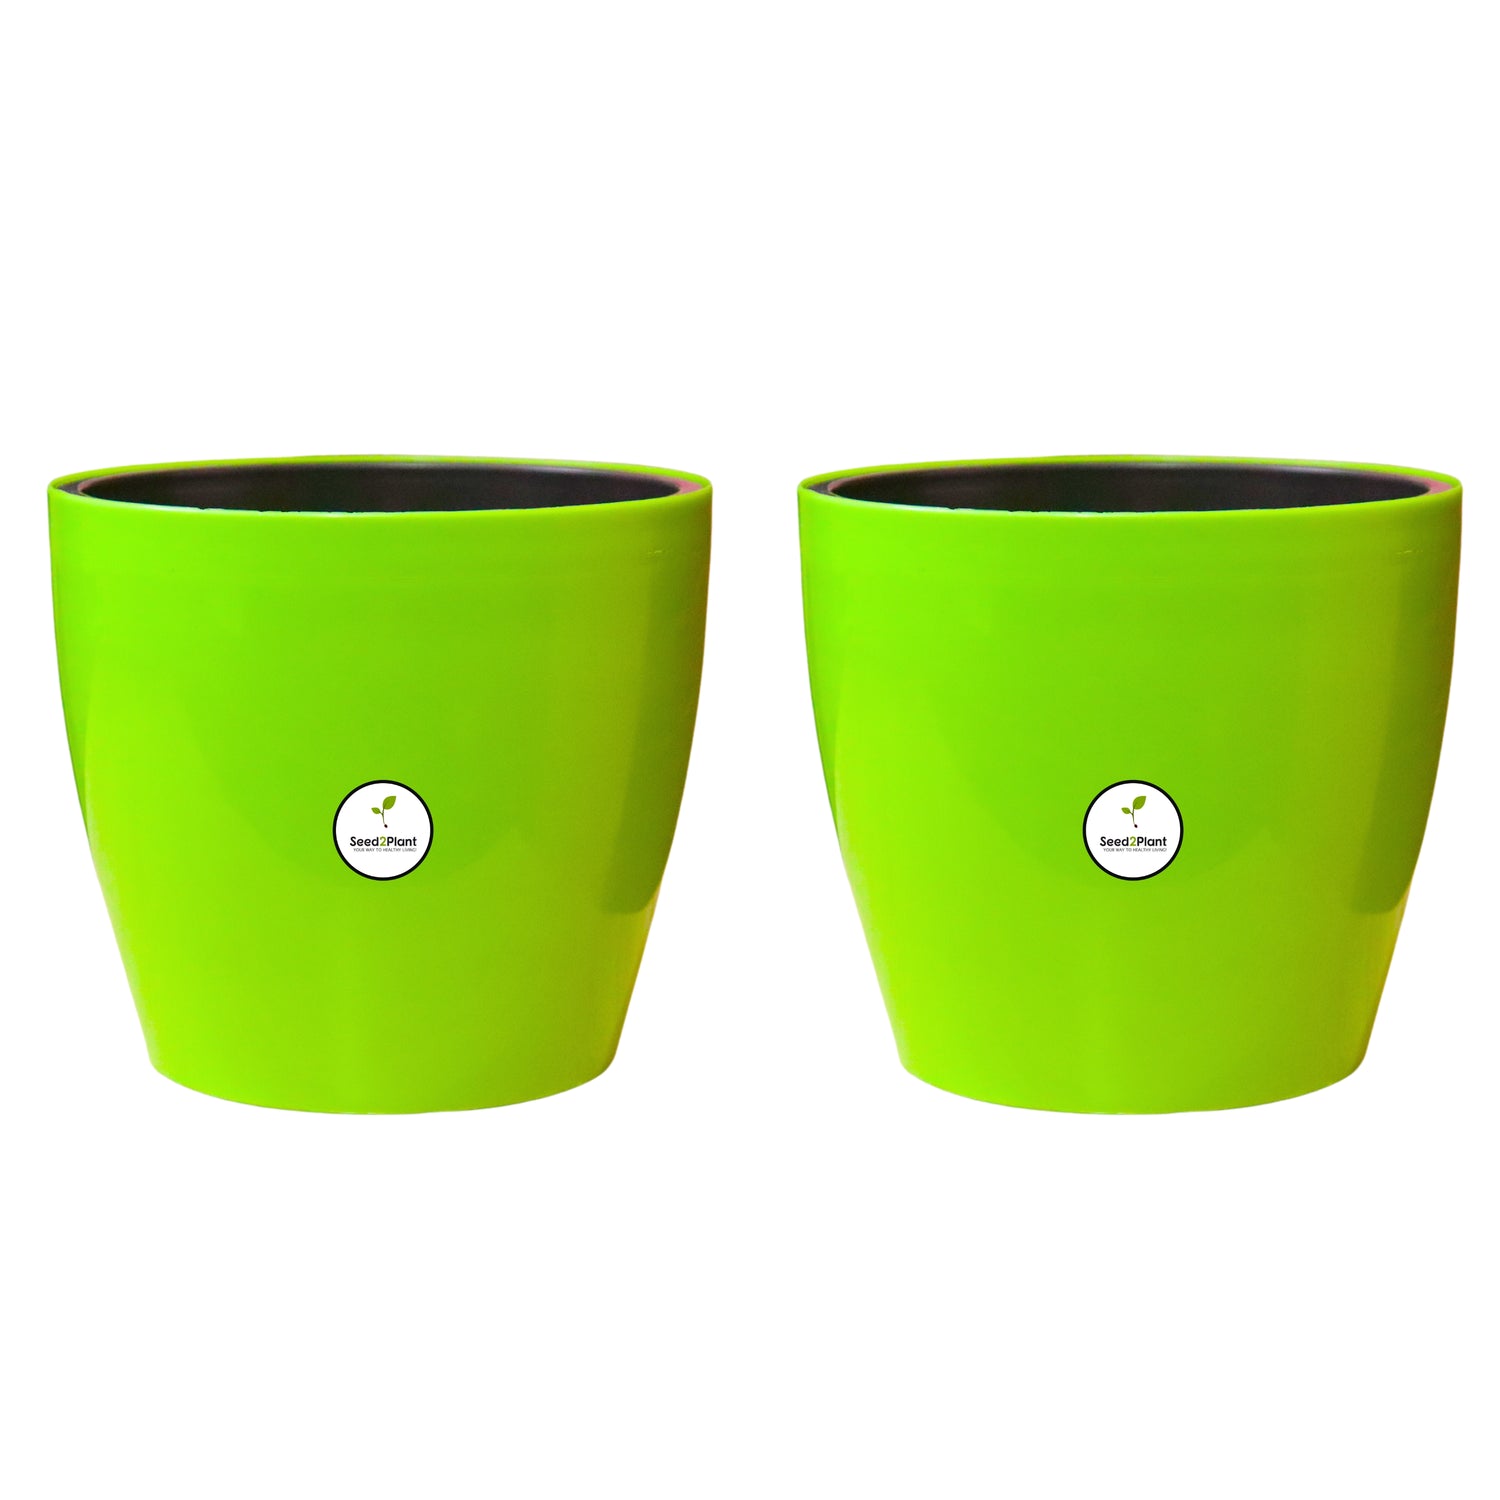 7 inch Indoor Plastic Pot (with Inner Pot) - Green Colour